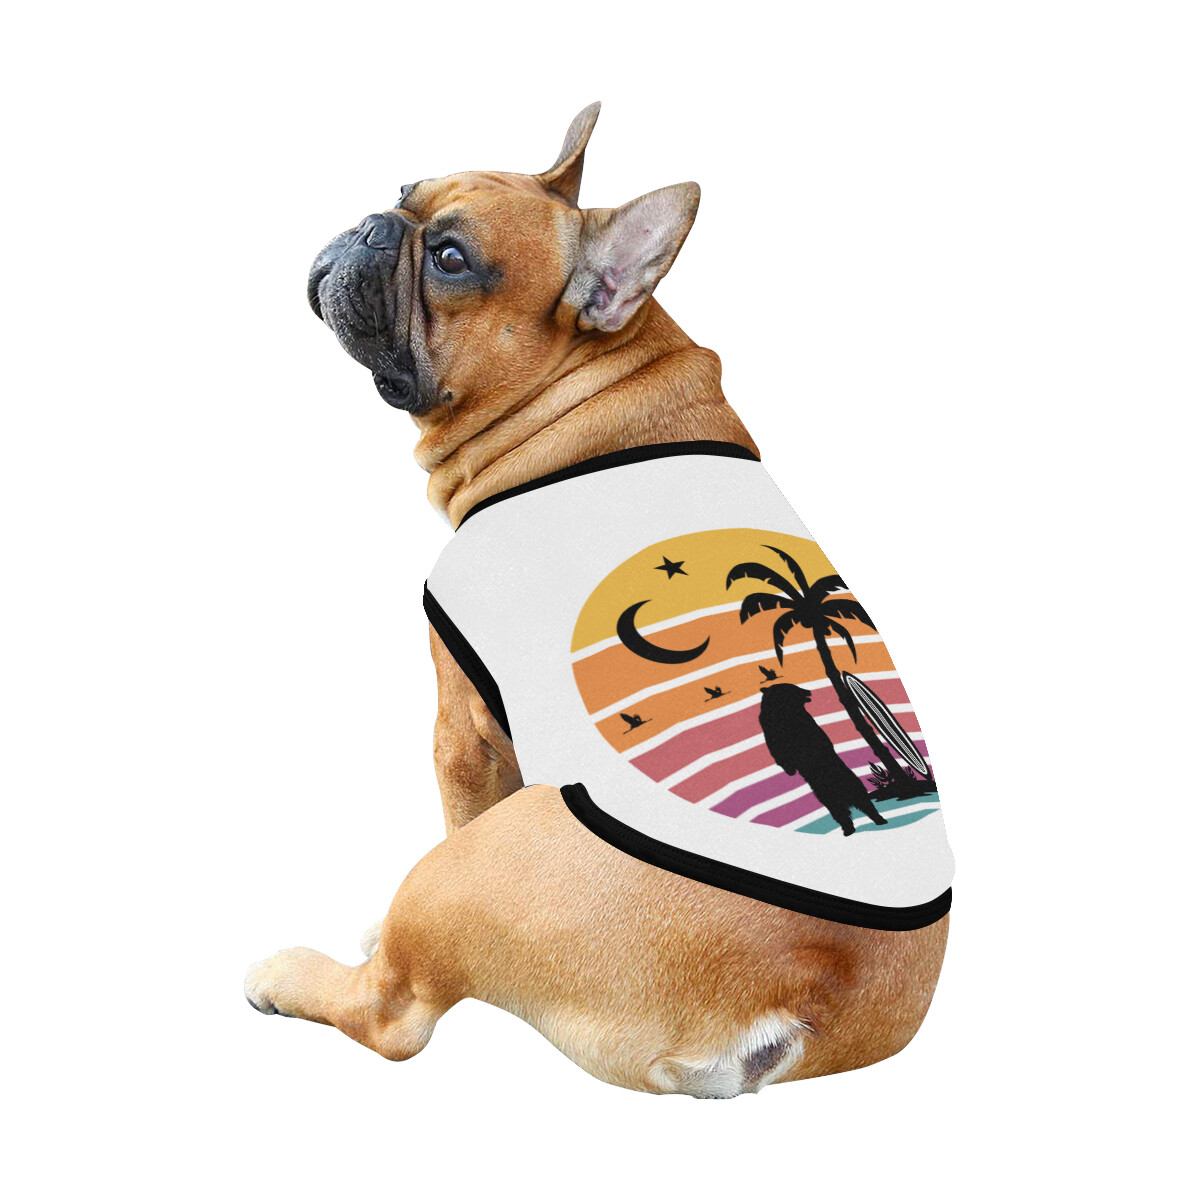 🐕 California Bear at sunset Dog shirt, Dog Tank Top, Dog t-shirt, Dog clothes, Gifts, 7 sizes XS to 3XL, dog gifts